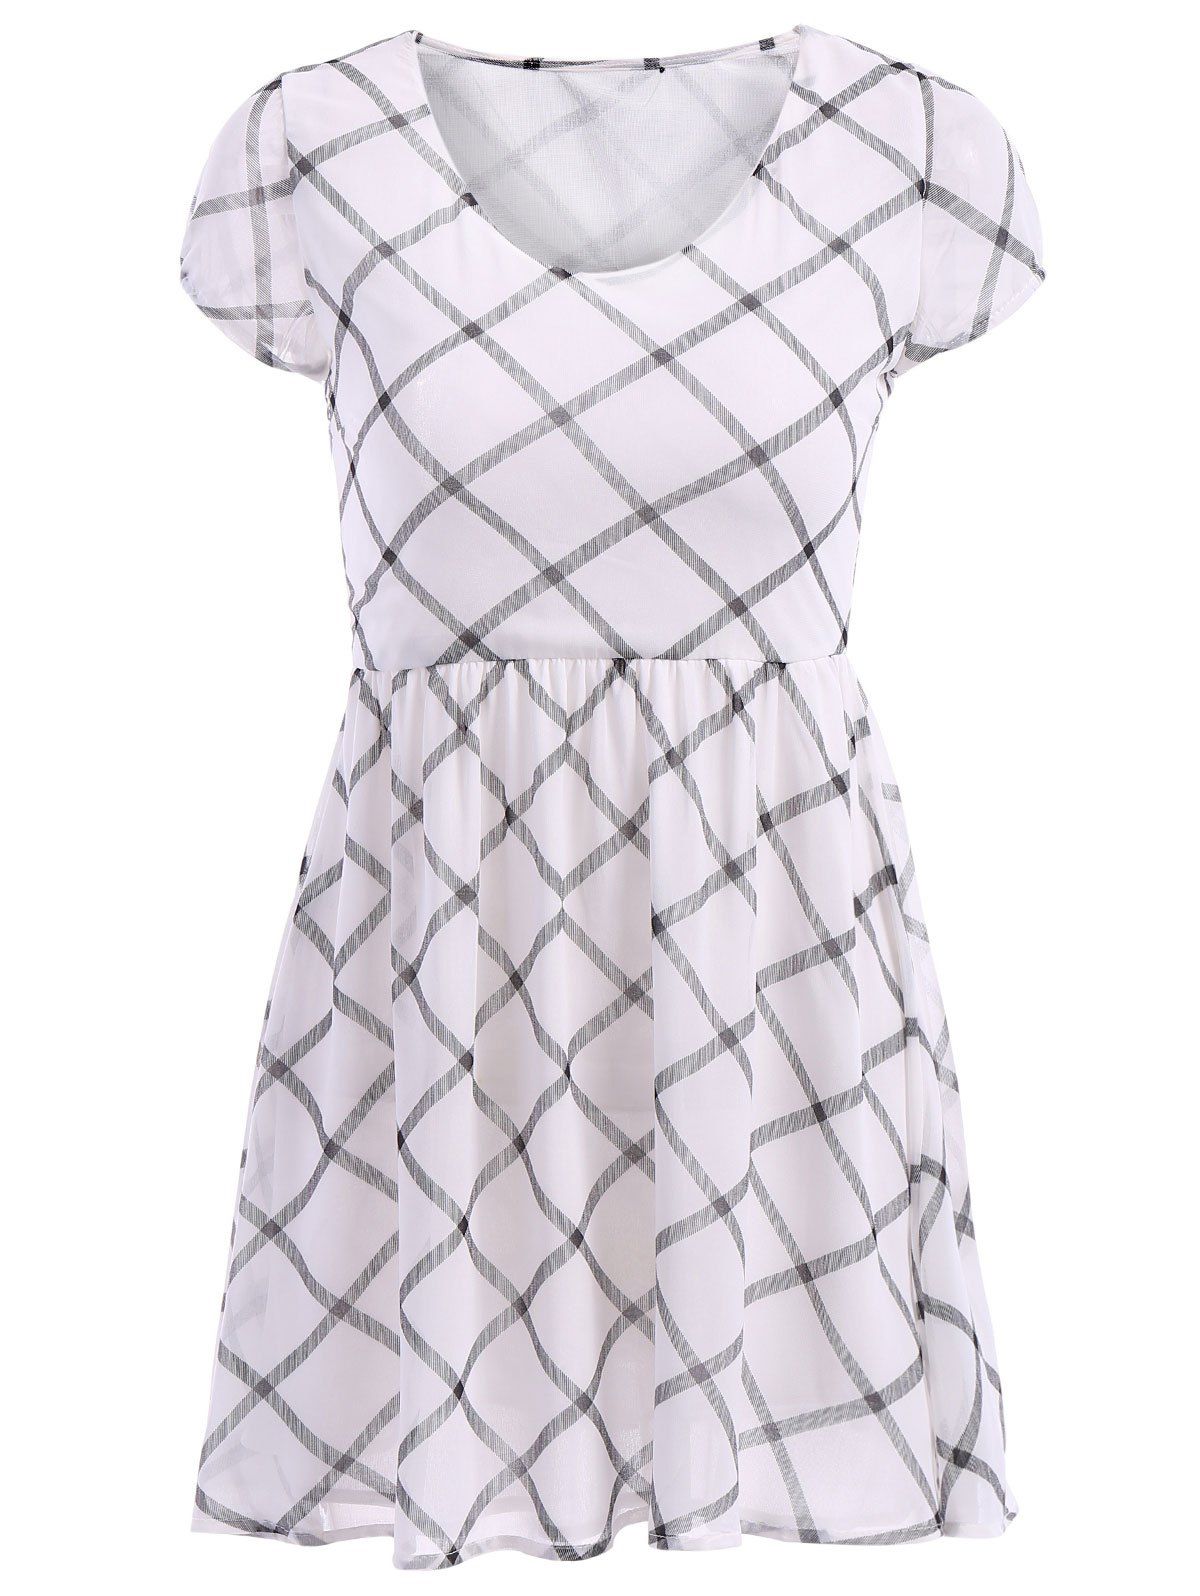 Brief Plaid V-Neck Short Sleeve Chiffon Dress For Women 